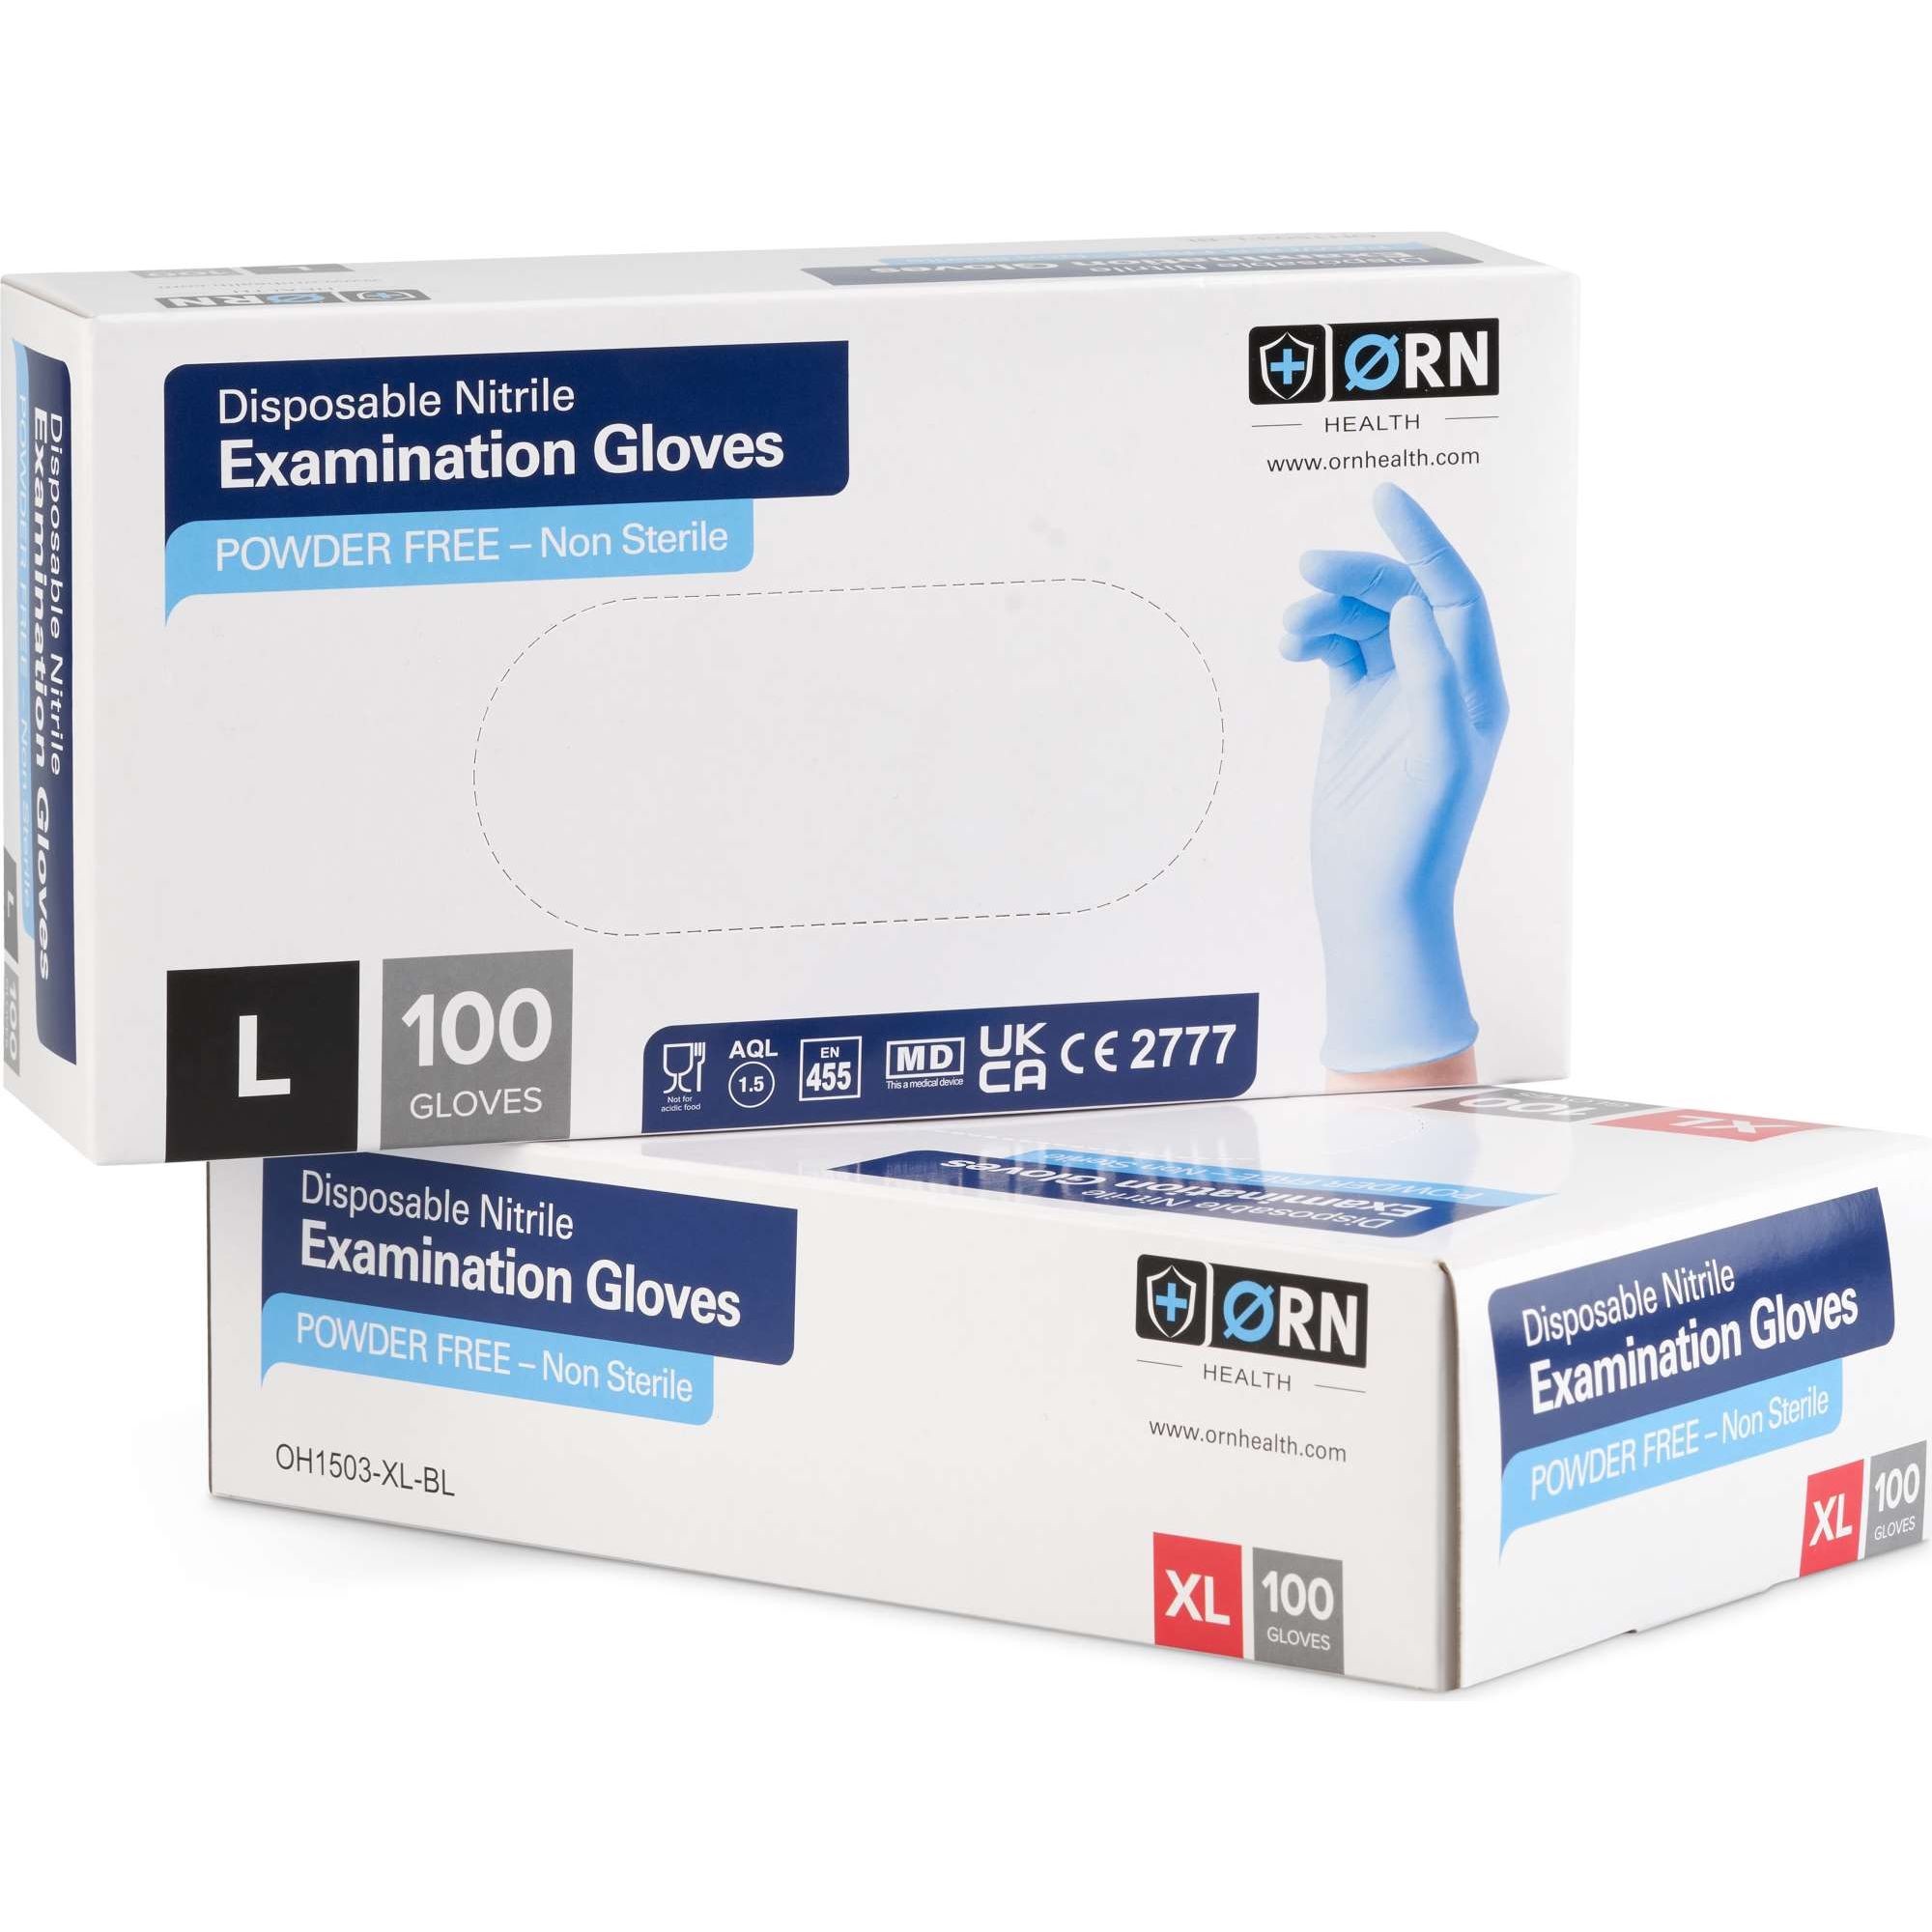 Disposable Nitrile POWDER FREE Examination Gloves (Box 100)